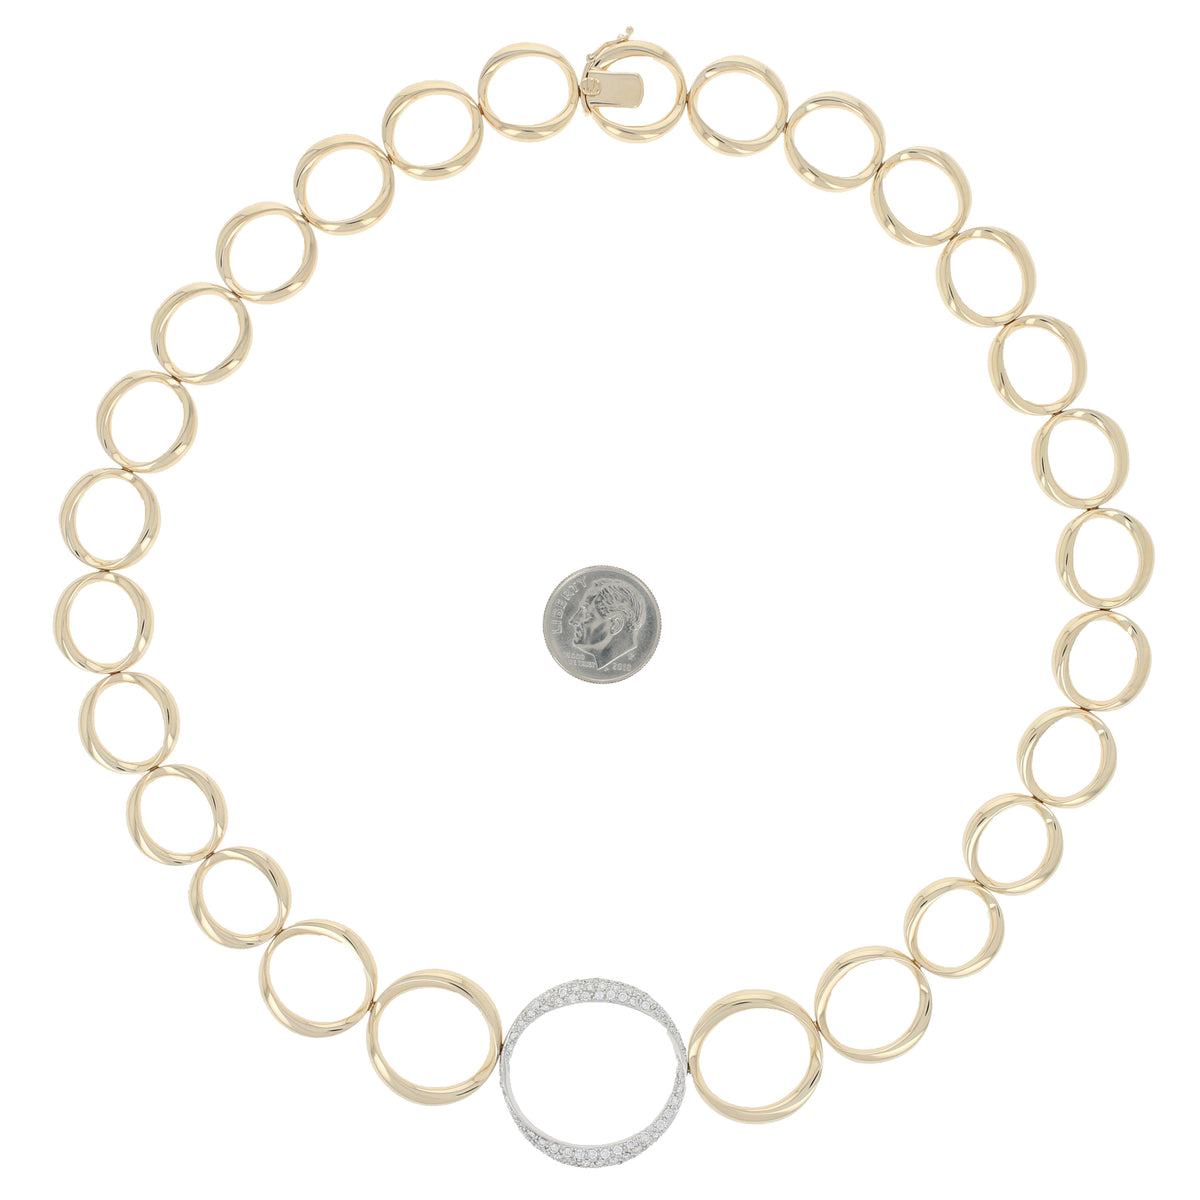 Diamond Circle Necklace 1.05ctw